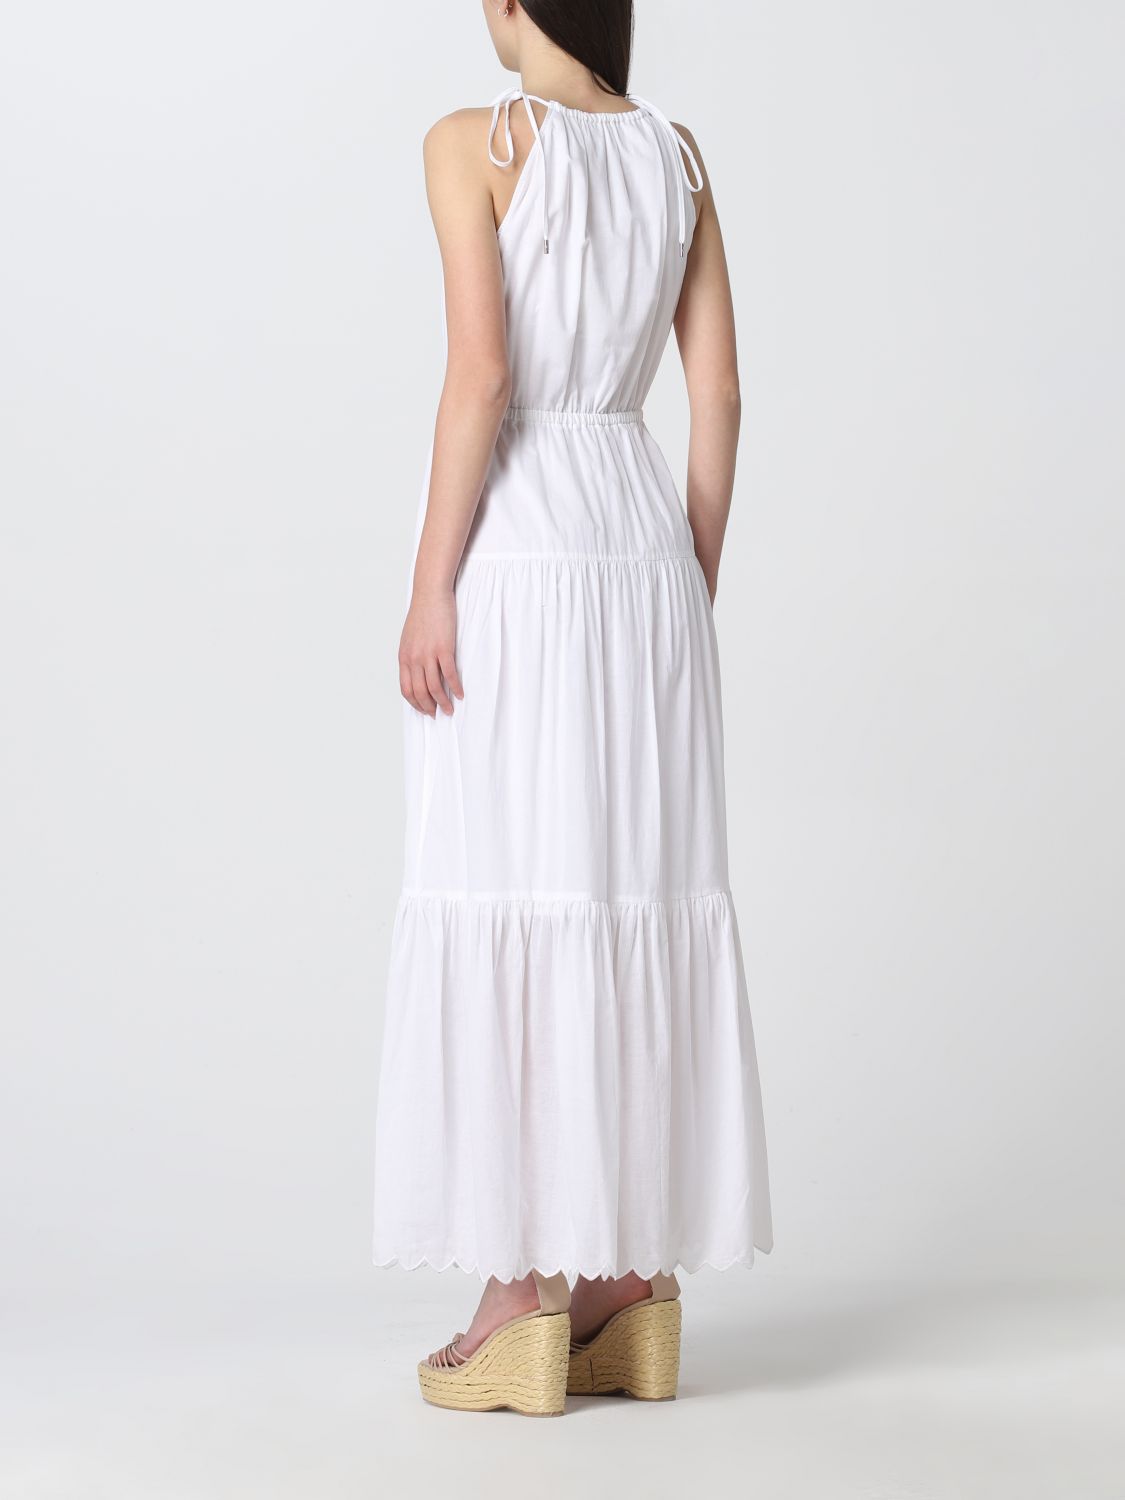 Michael Kors Outlet: dress for woman - White | Michael Kors dress  MS280YZ4YJ online on 